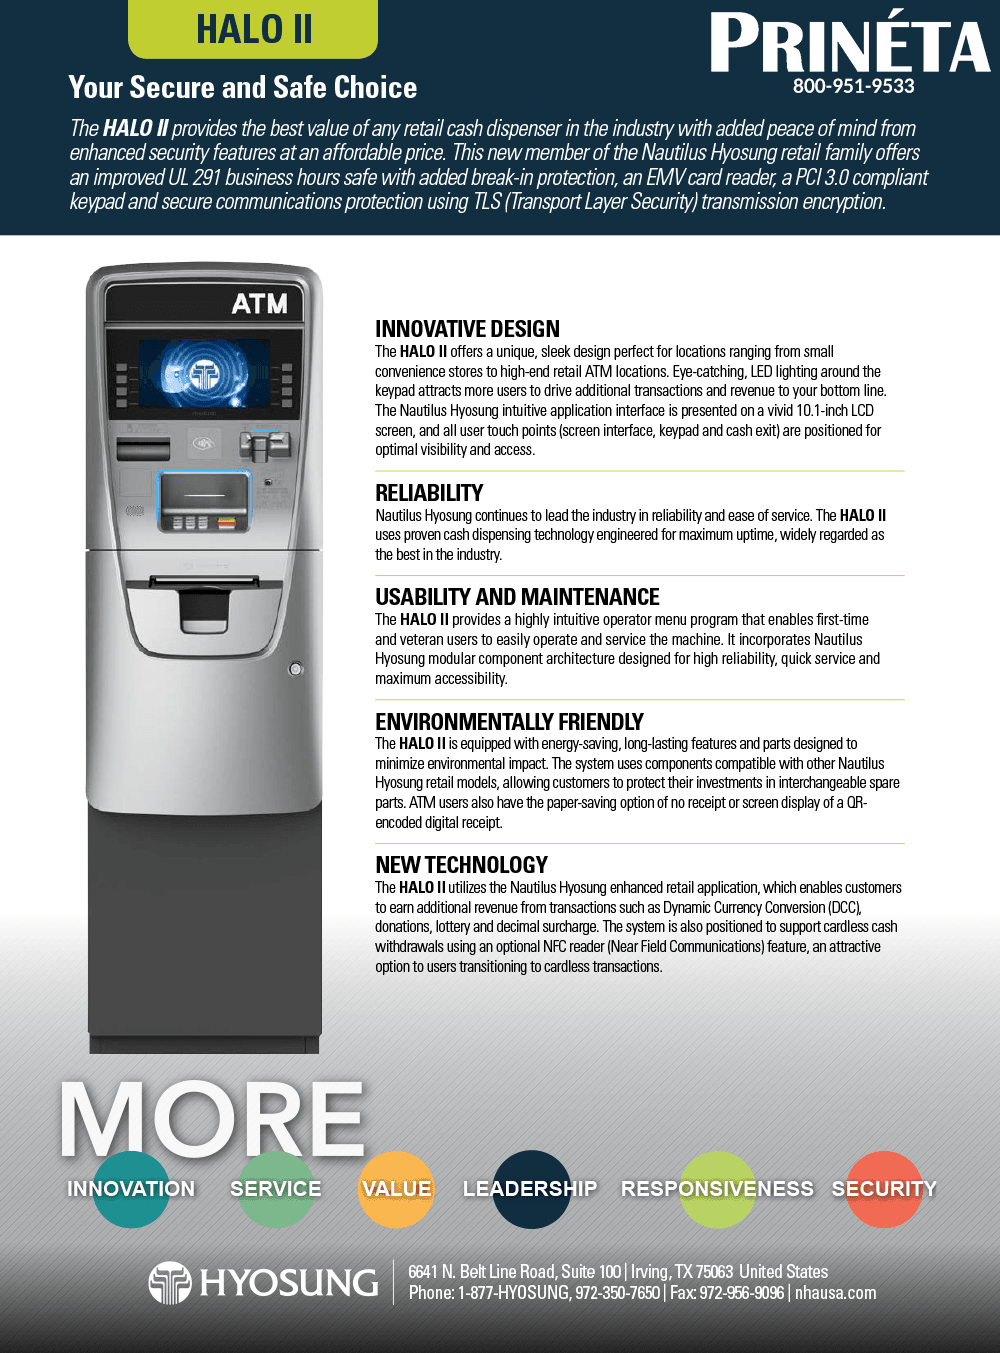 Nautilus Hyosung Halo II ATM Machine 